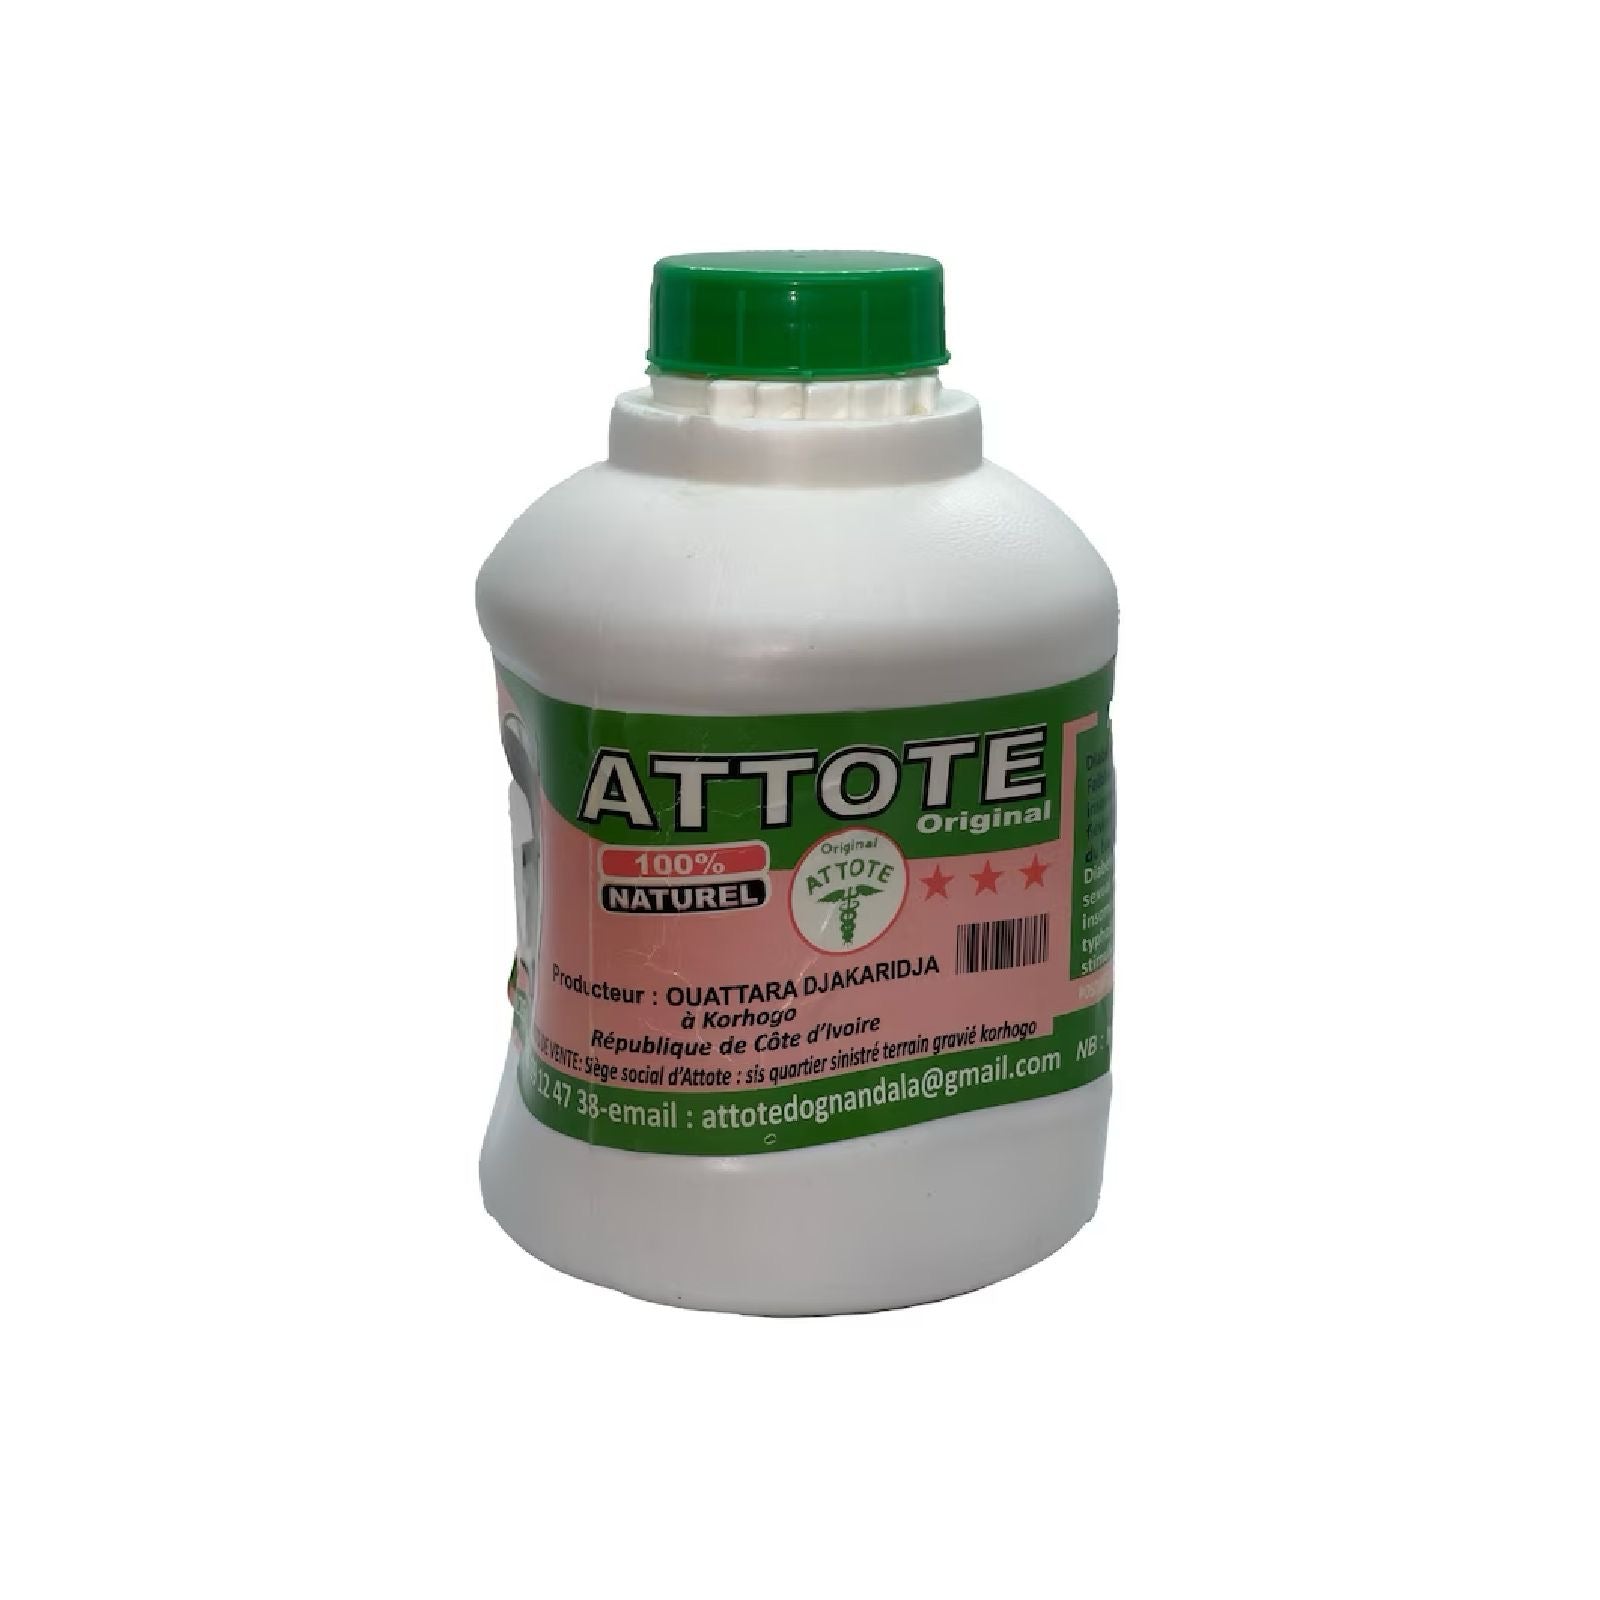 ATTOTE-Original-Cote d'ivoire